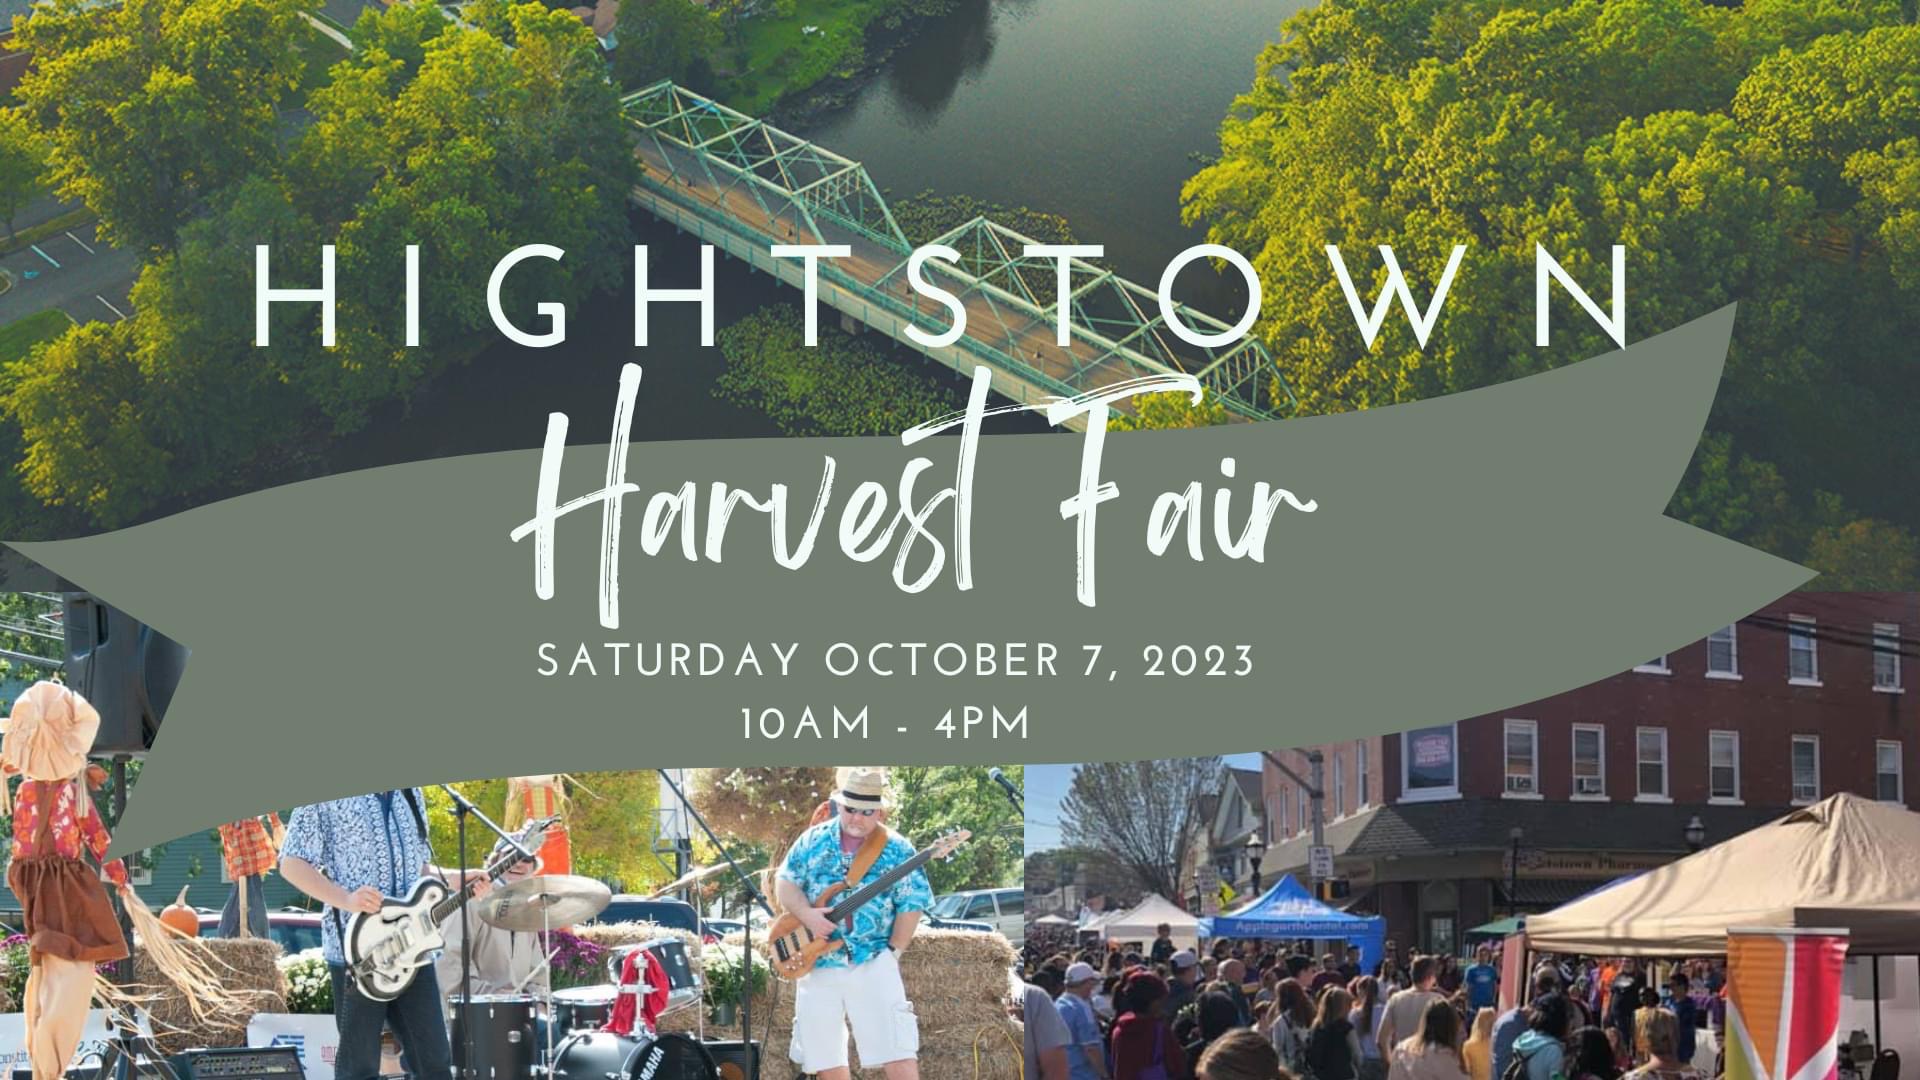 Hightstown Harvest Fair